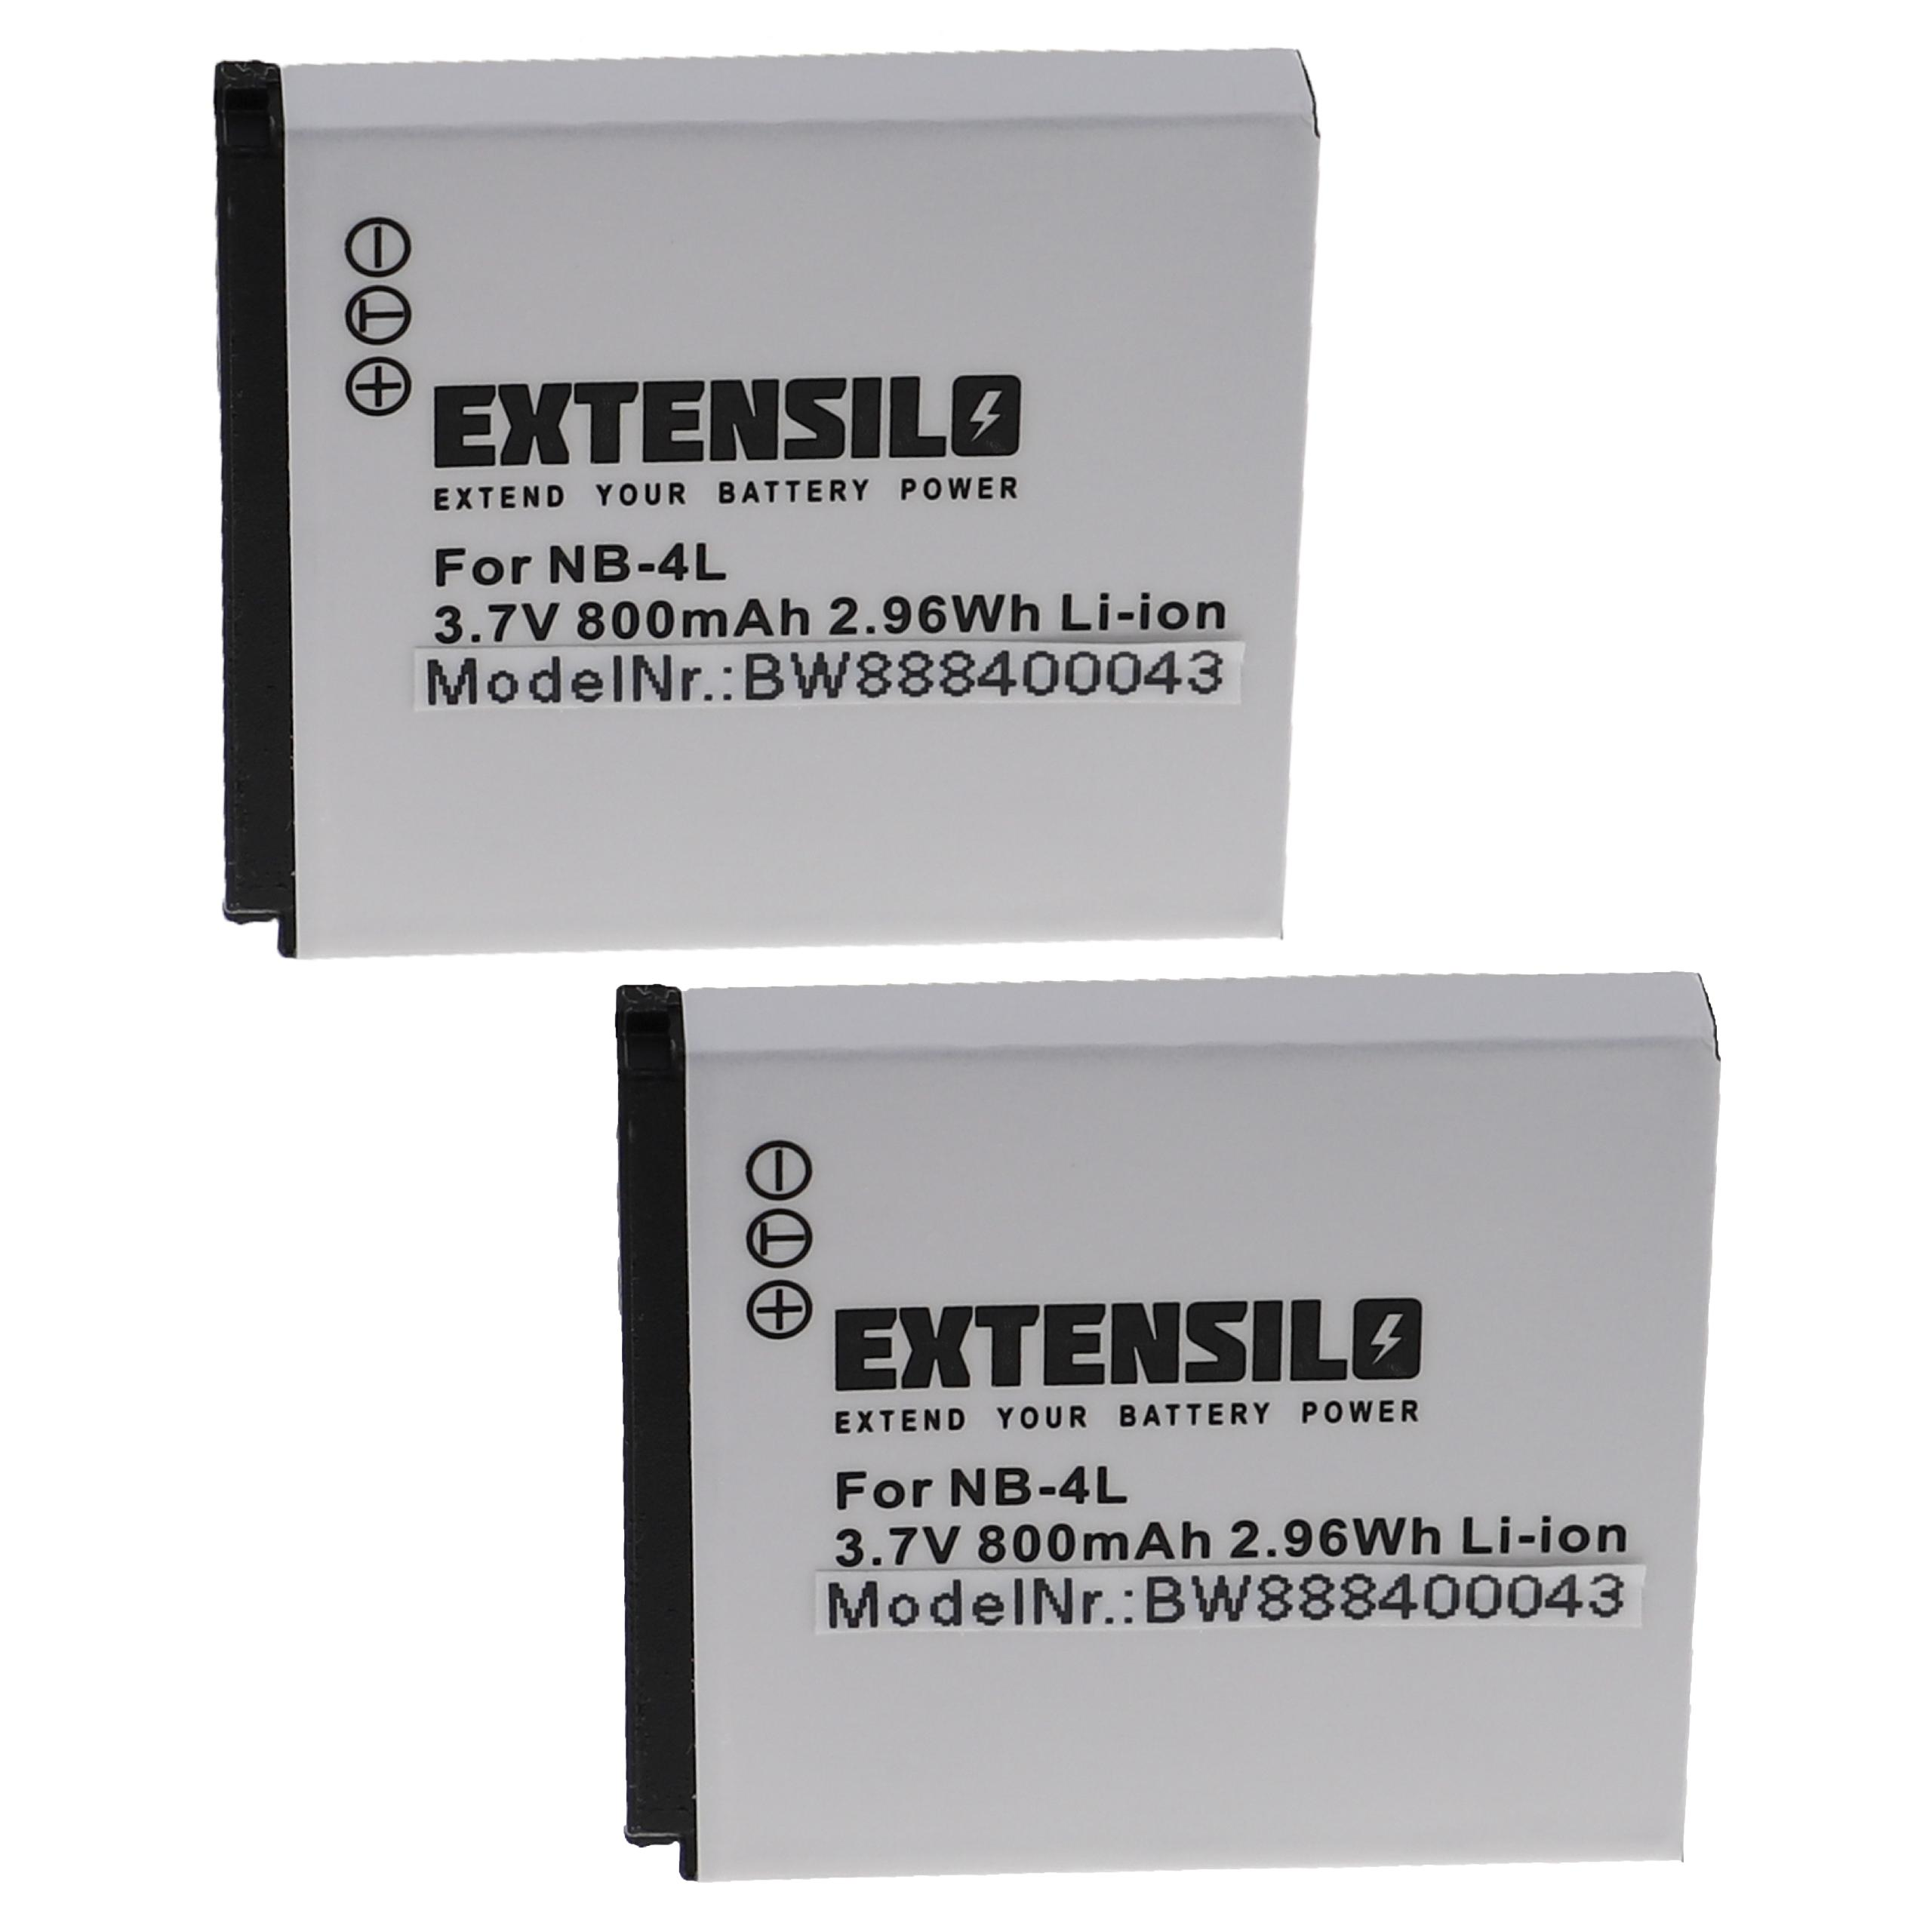 EXTENSILO kompatibel mit Kamera, Ixus 130, 800 255 30 40, Canon Akku 110 220HS, is, HS, 3.7 Li-Ion IS, 115 - HS, HS, 120 117 Volt, Digital 230HS